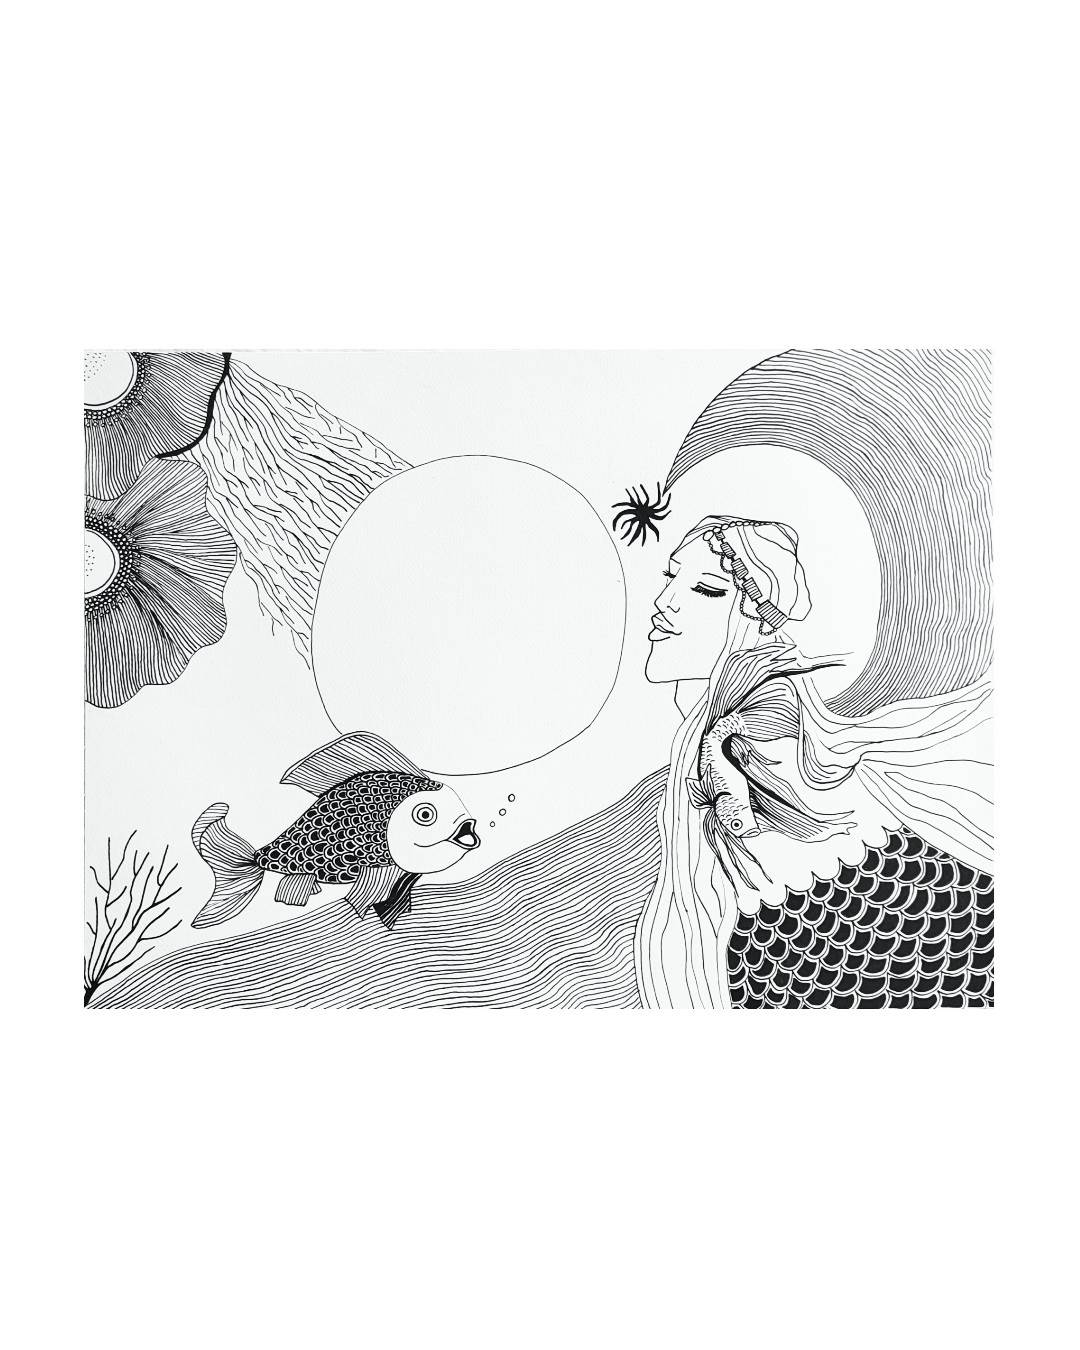 Lua Cheia em Peixes, original Figure humaine Papier Dessin et illustration par Inês  Sousa Cardoso